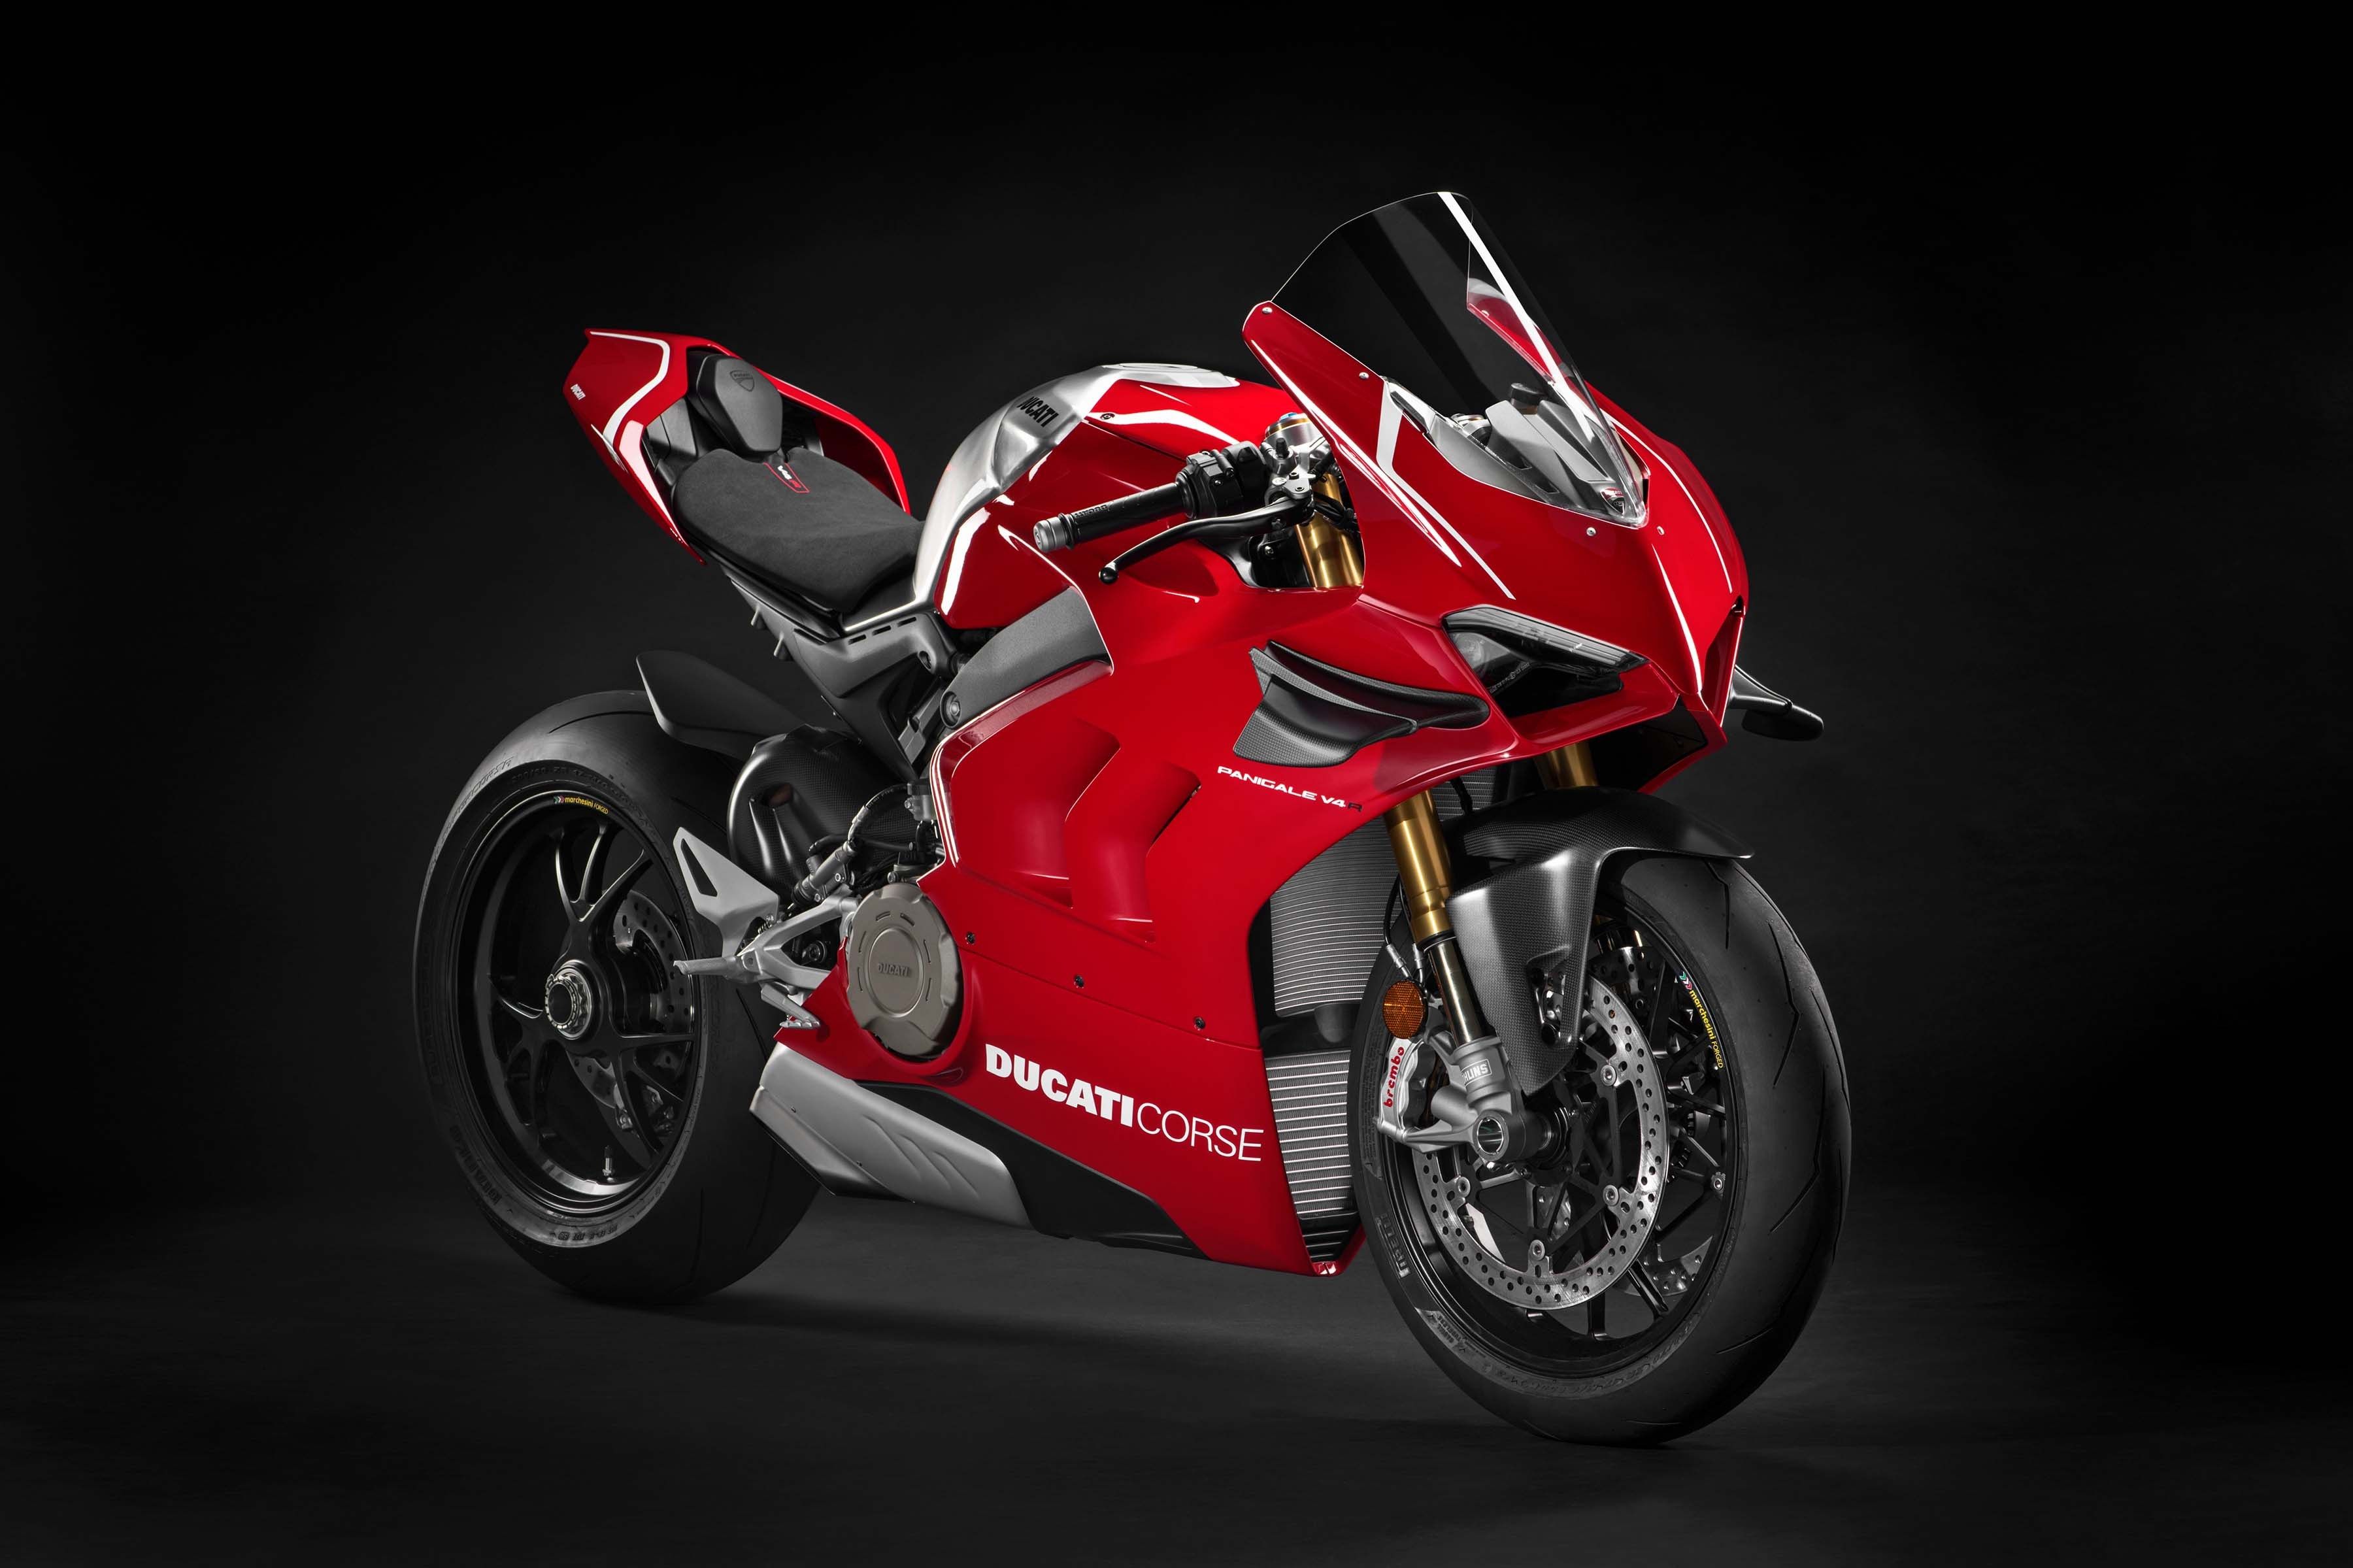 Ducati Panigale V4 R Debuts at World Ducati Première 2019